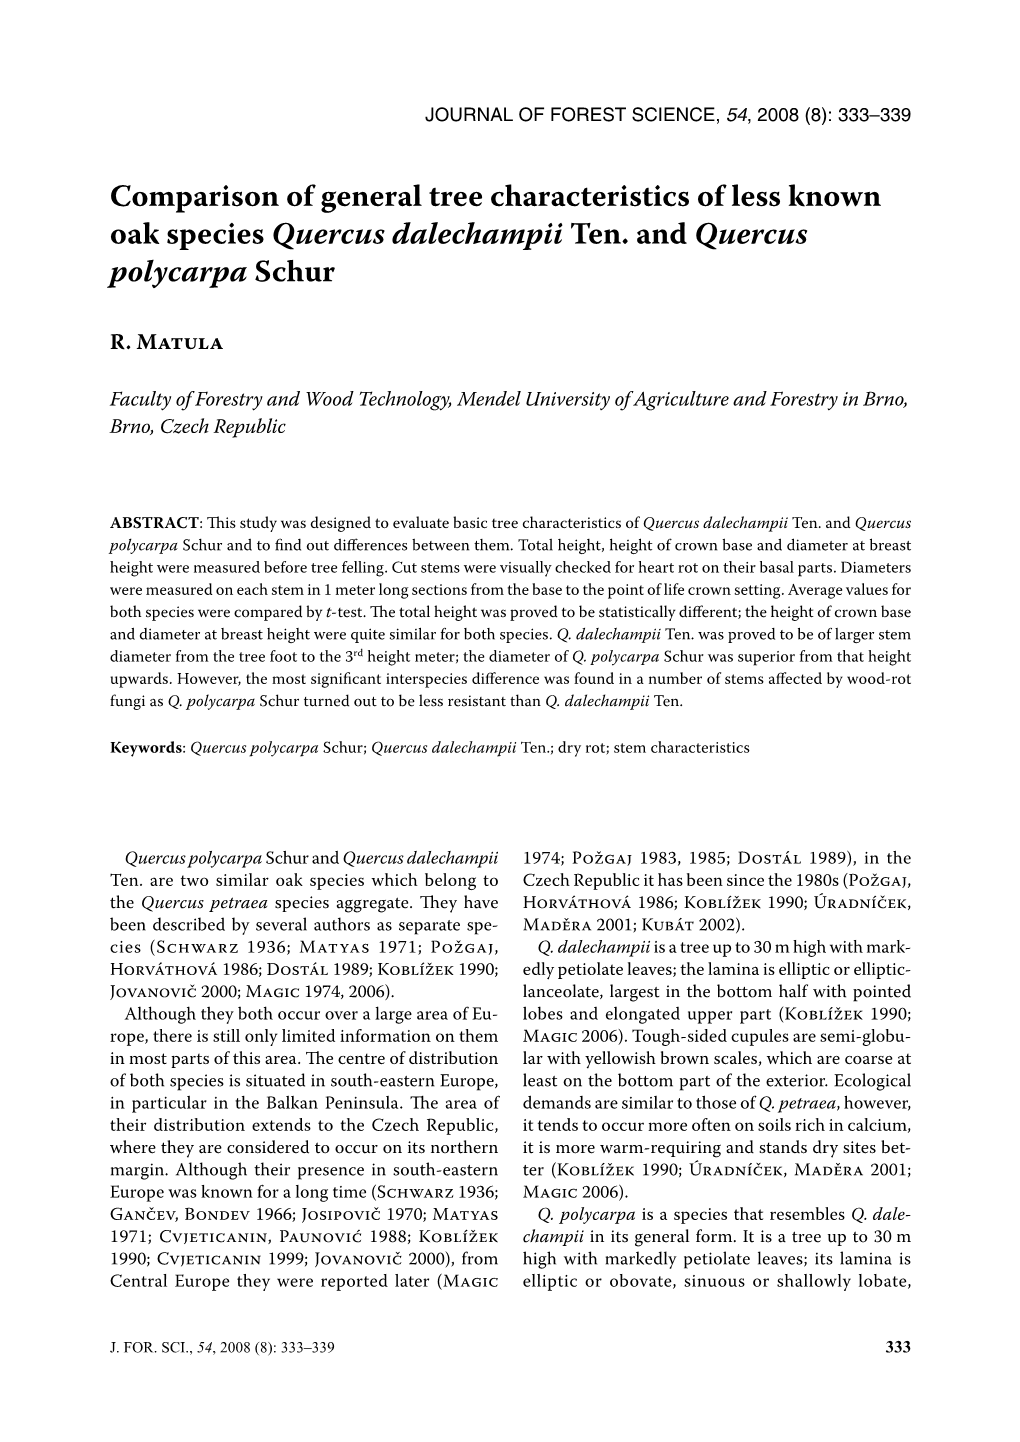 Comparison of General Tree Characteristics of Less Known Oak Species Quercus Dalechampii Ten